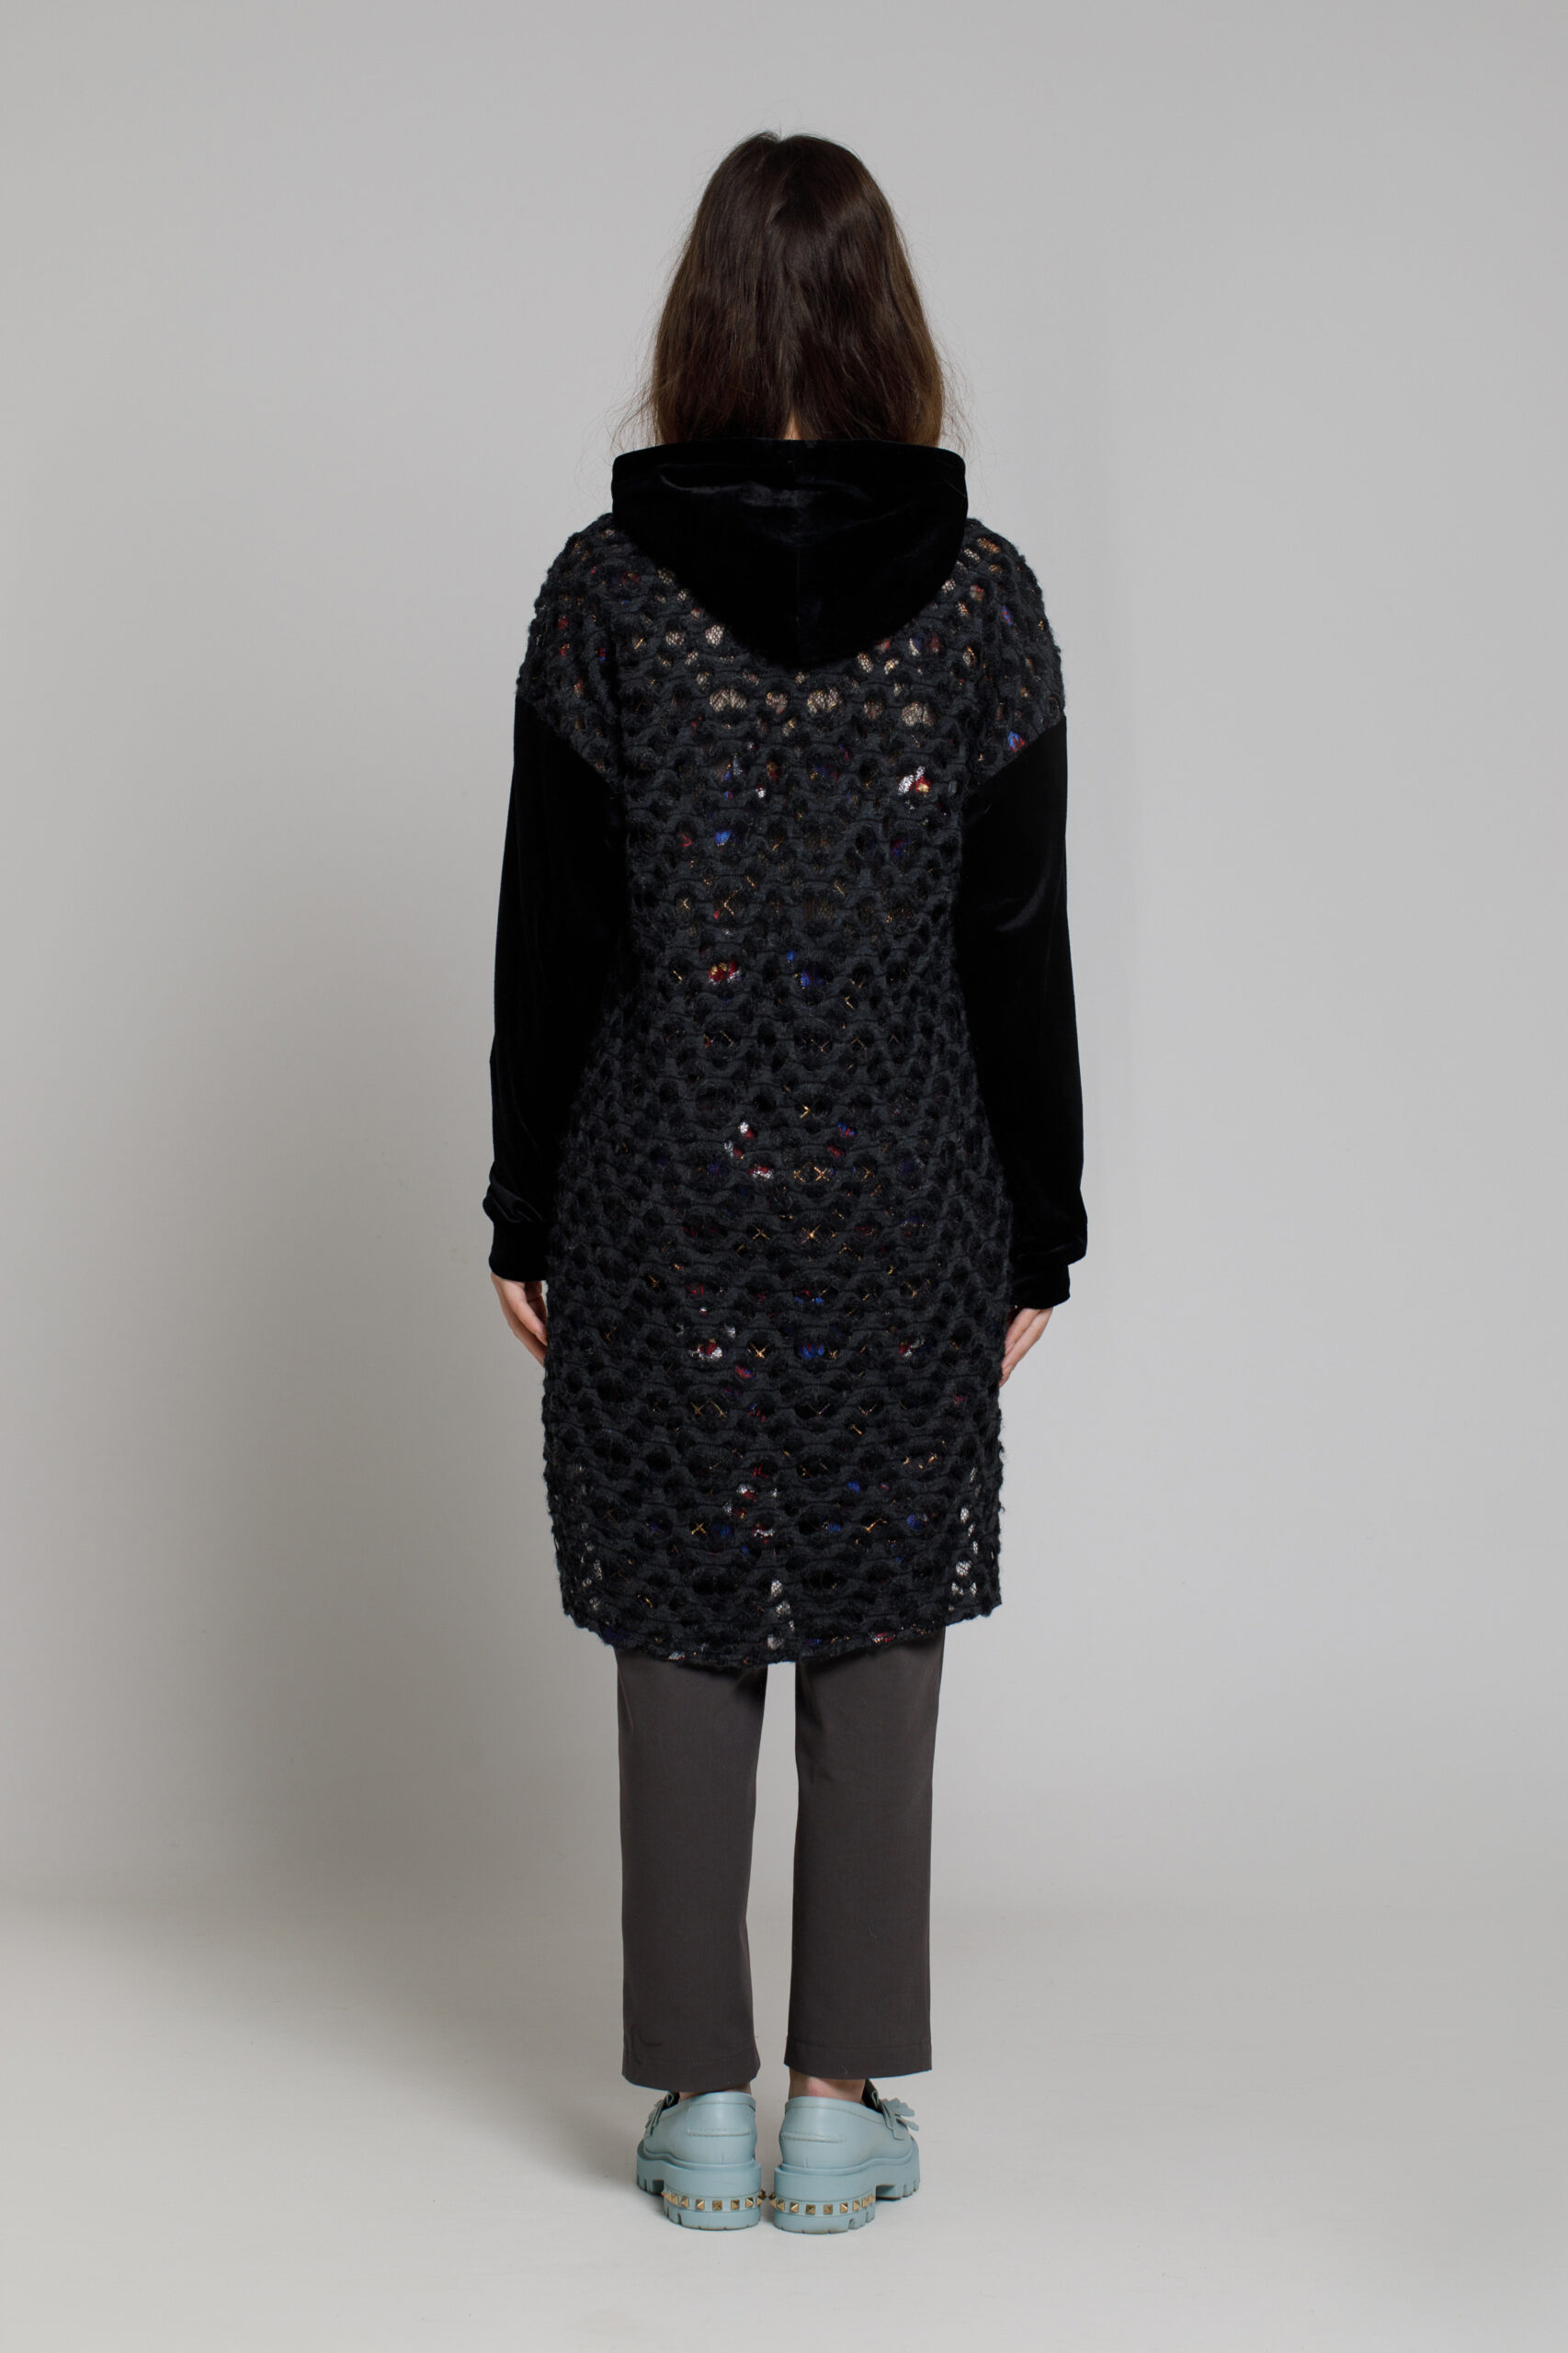 ALARY sweatshirt made of black velvet and knit. Natural fabrics, original design, handmade embroidery